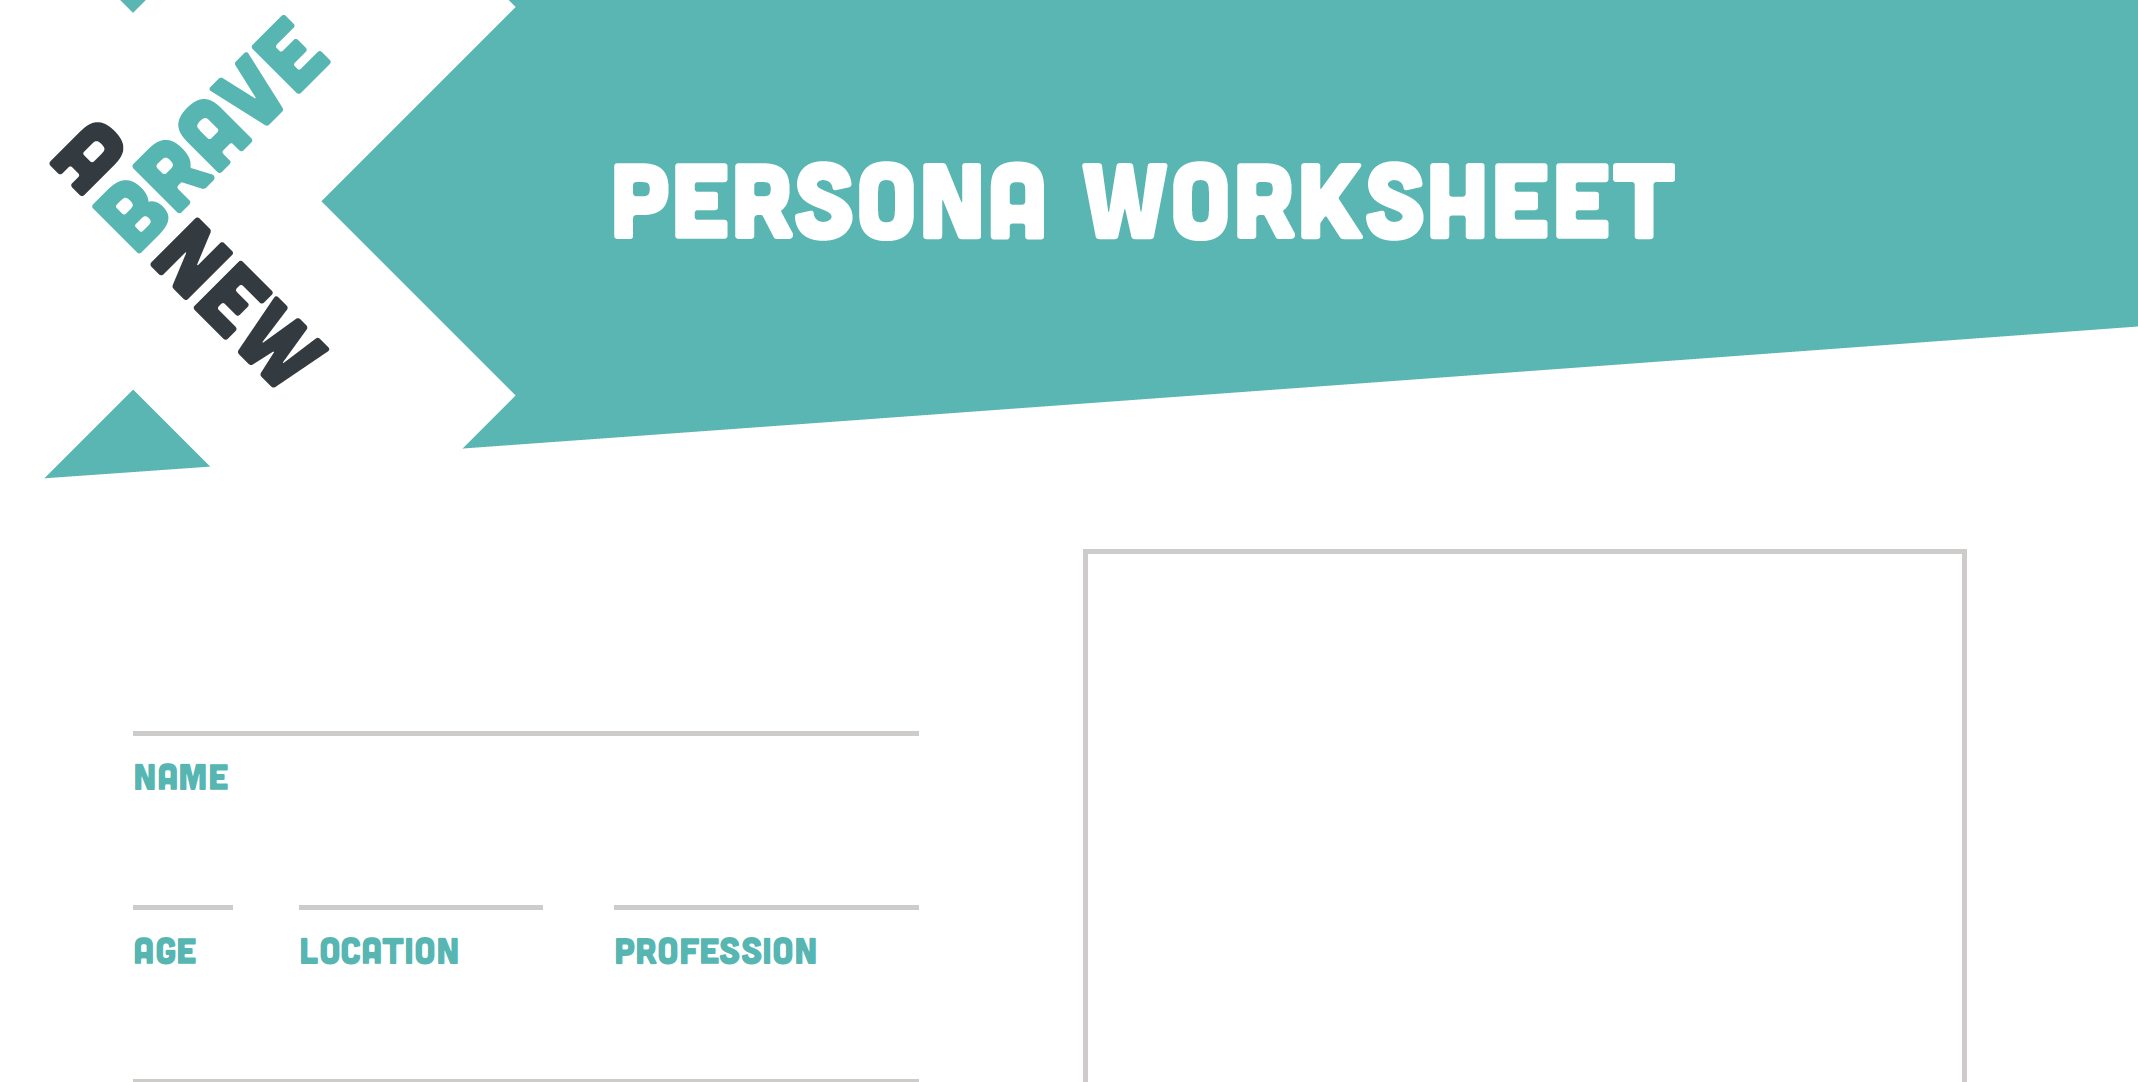 Persona Worksheet